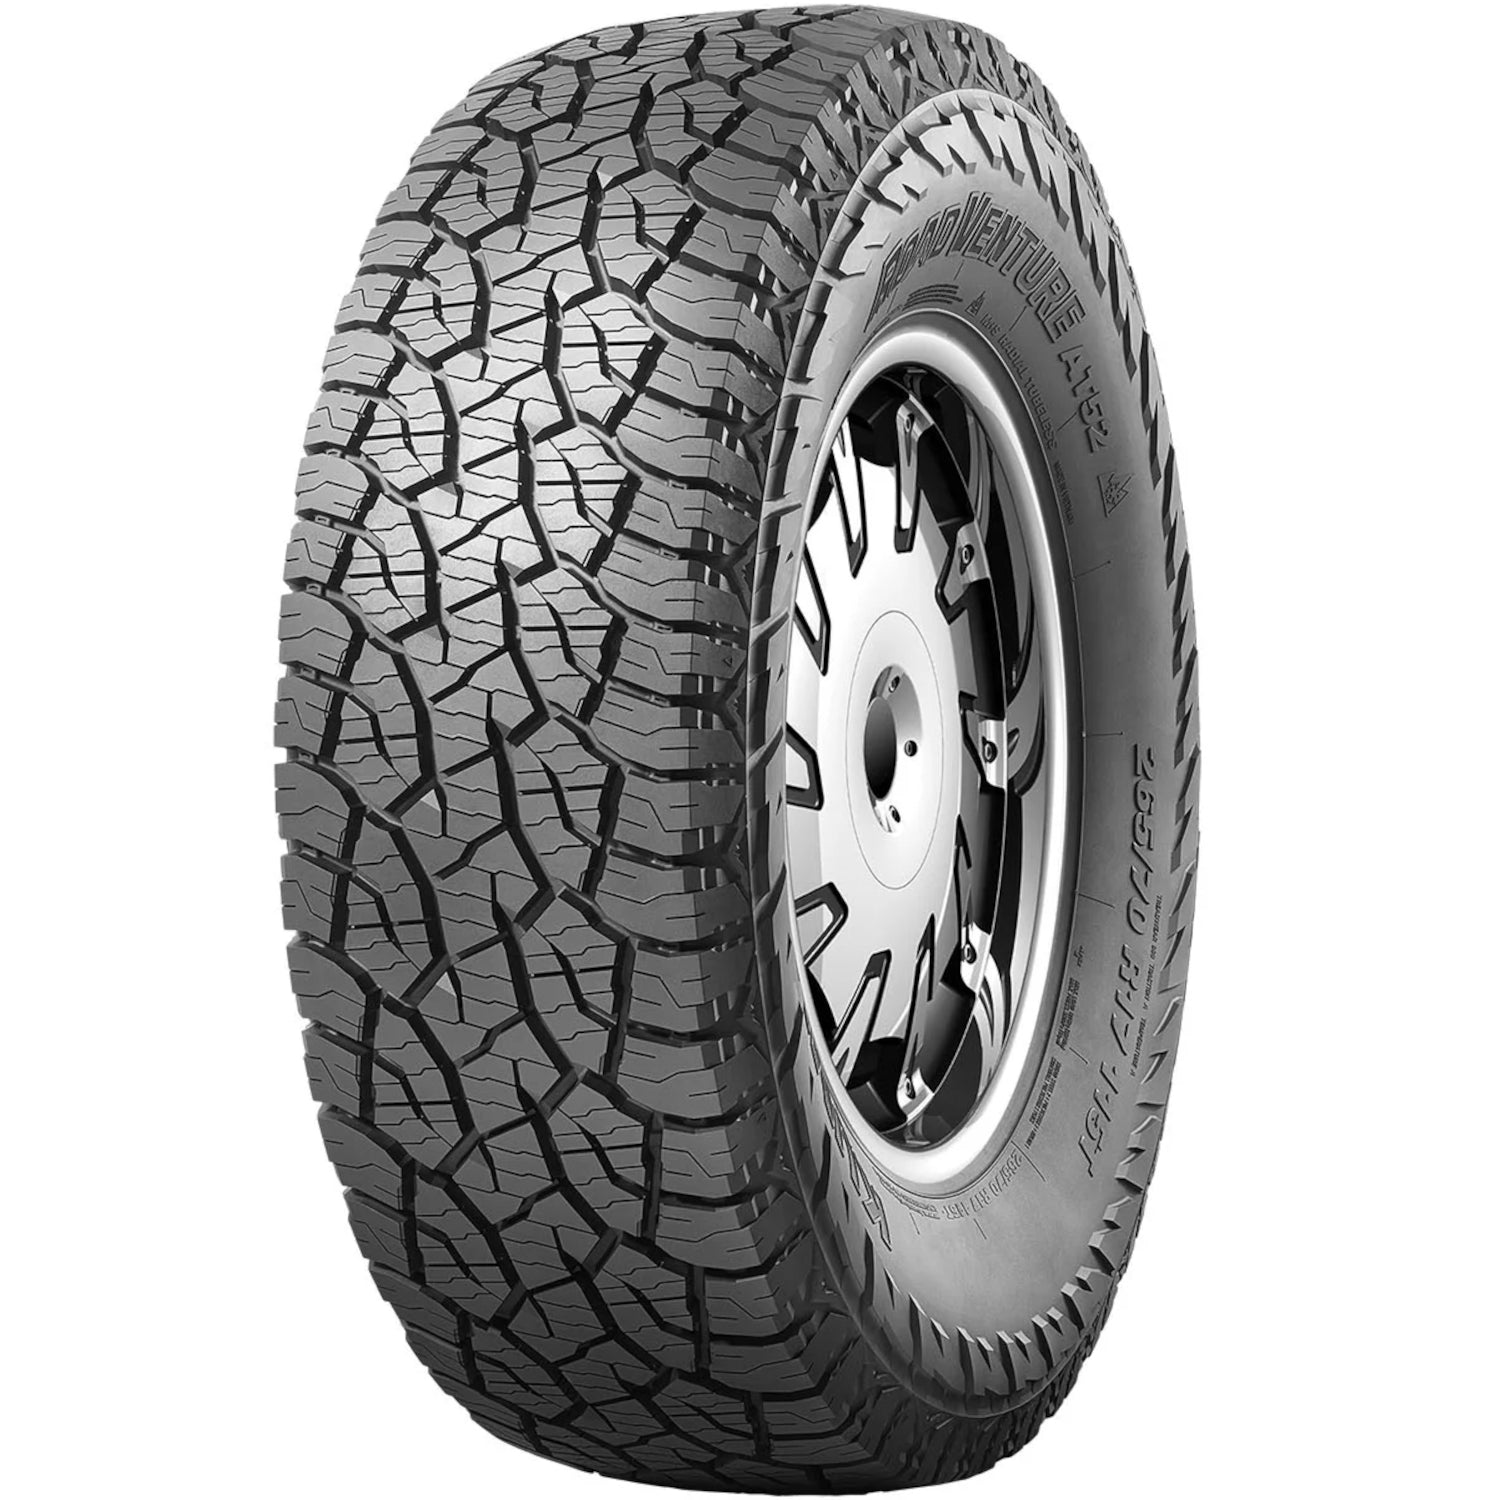 KUMHO ROAD VENTURE AT52 LT265/75R16 (31.7X10.4R 16) Tires